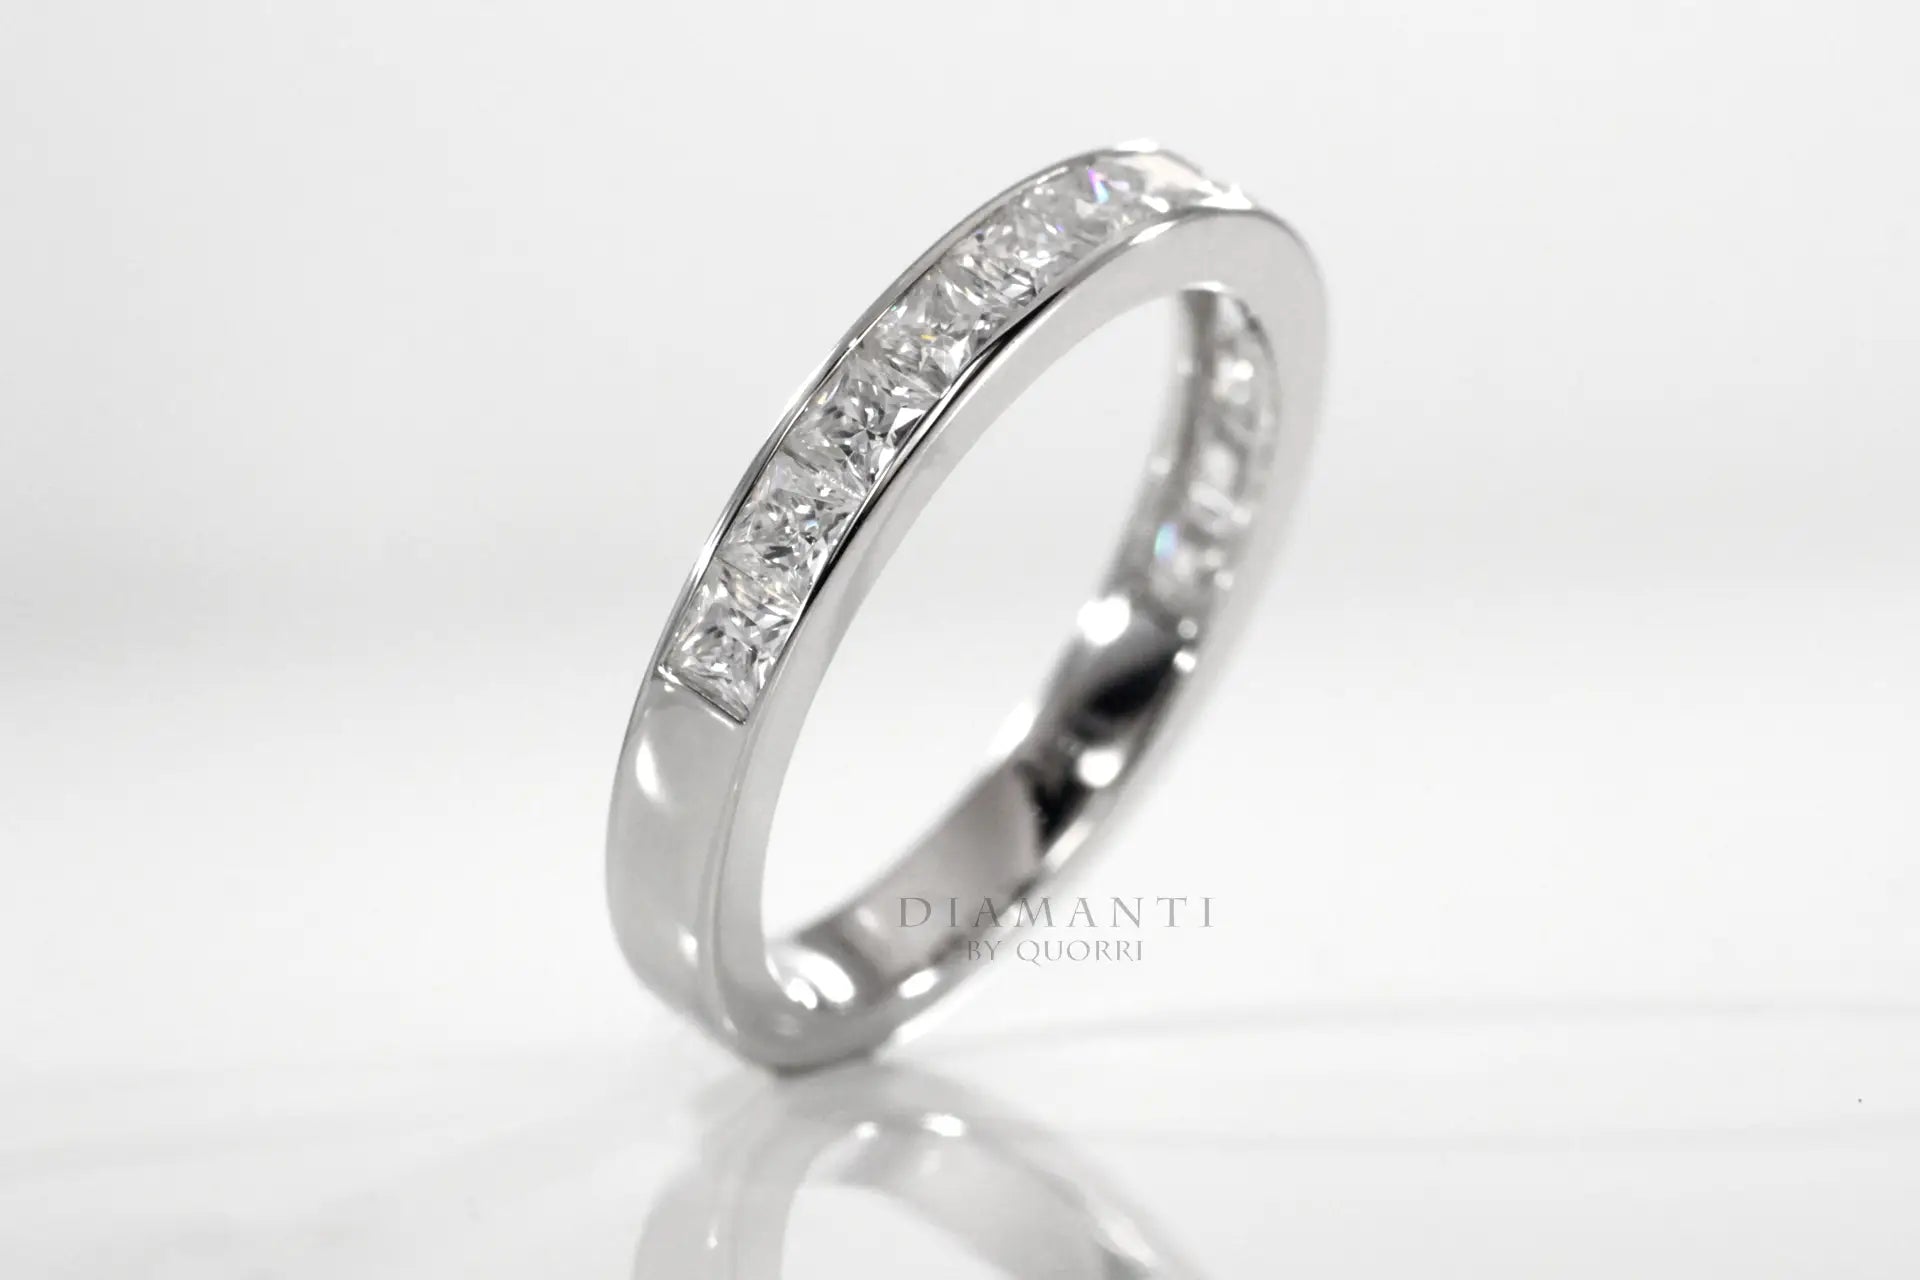 18k white gold designer affordable princess lab diamond wedding anniversary band Quorri